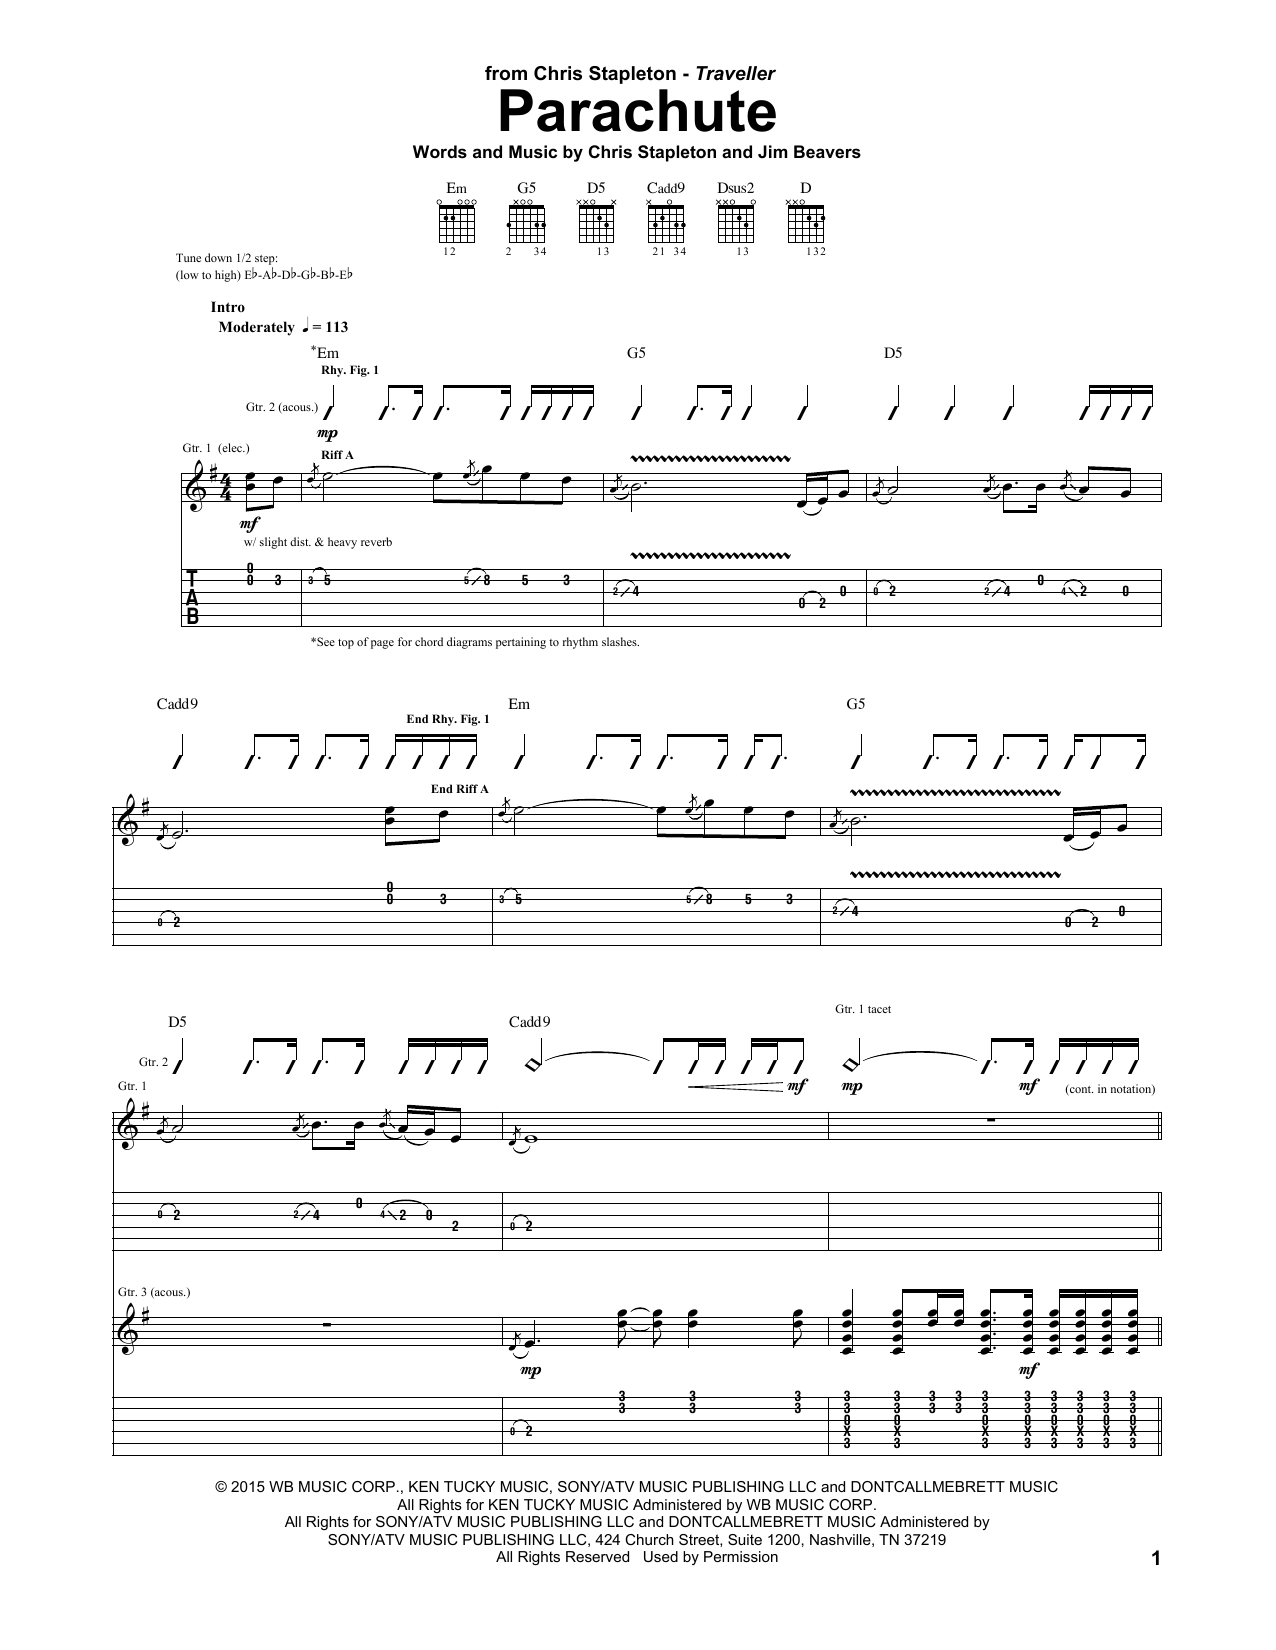 Chris Stapleton Parachute Sheet Music Notes & Chords for Guitar Tab - Download or Print PDF